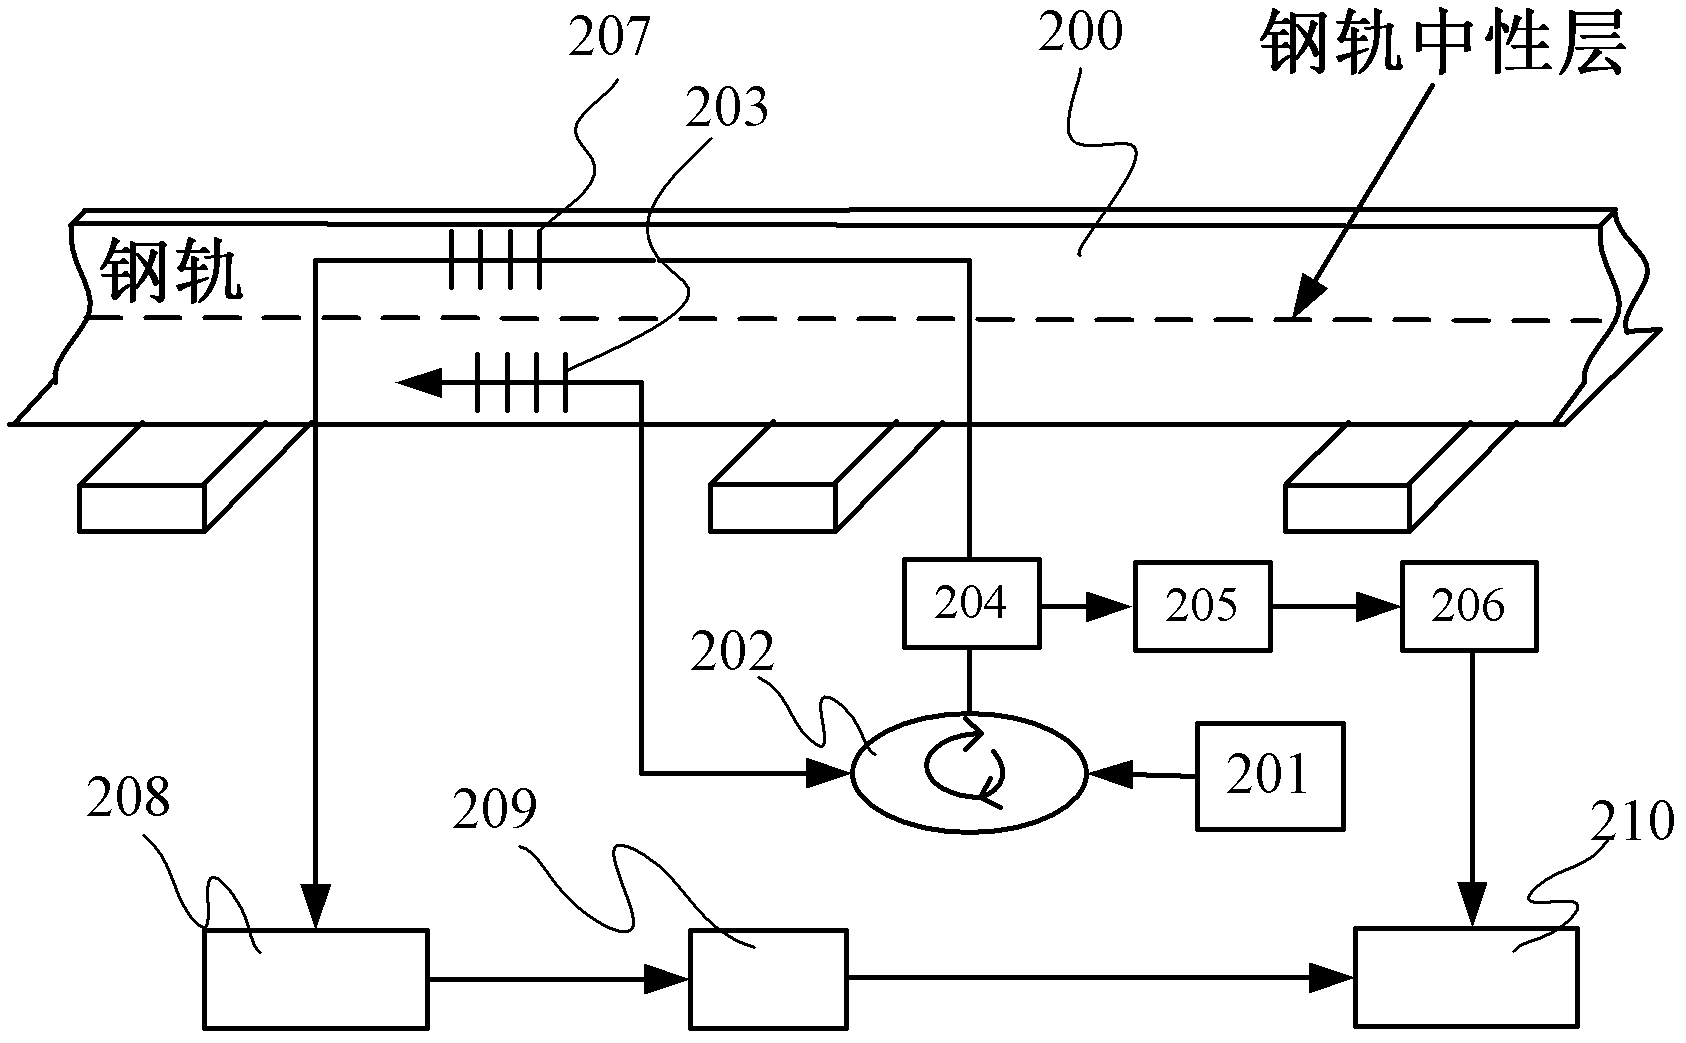 Rail straining and sensing method based on bidirectional strain matching fiber grating demodulating technique